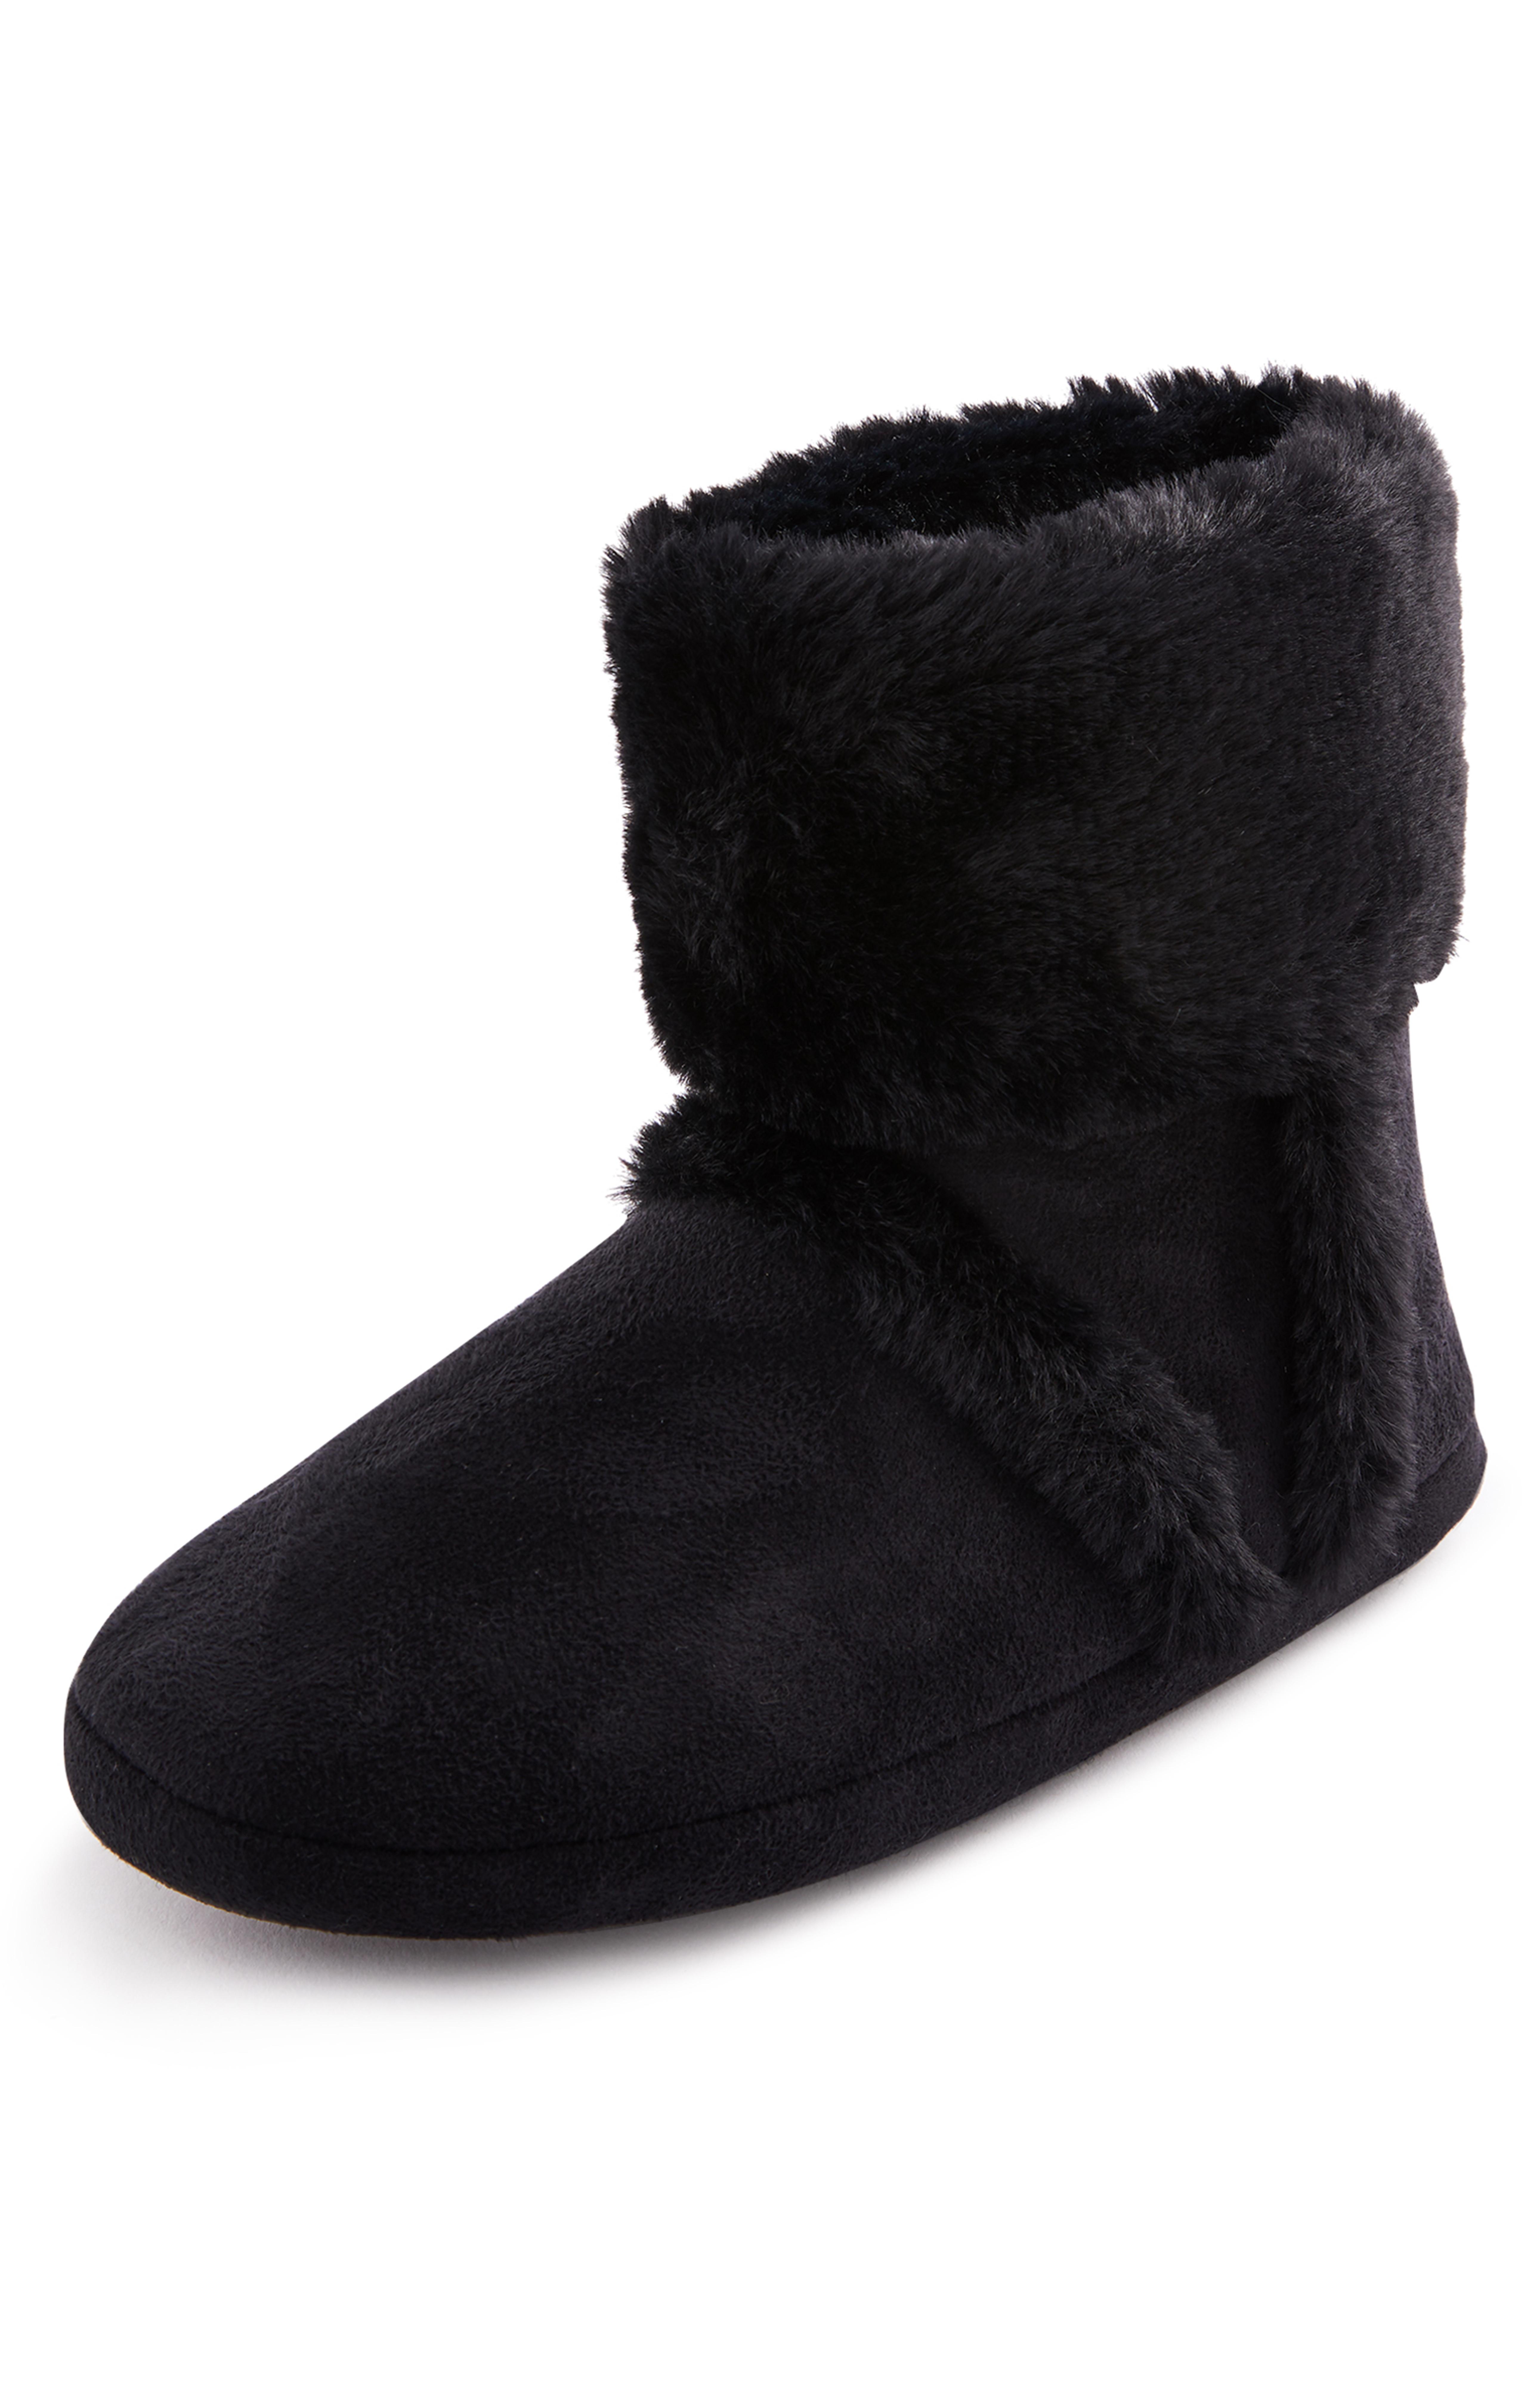 primark slipper boots